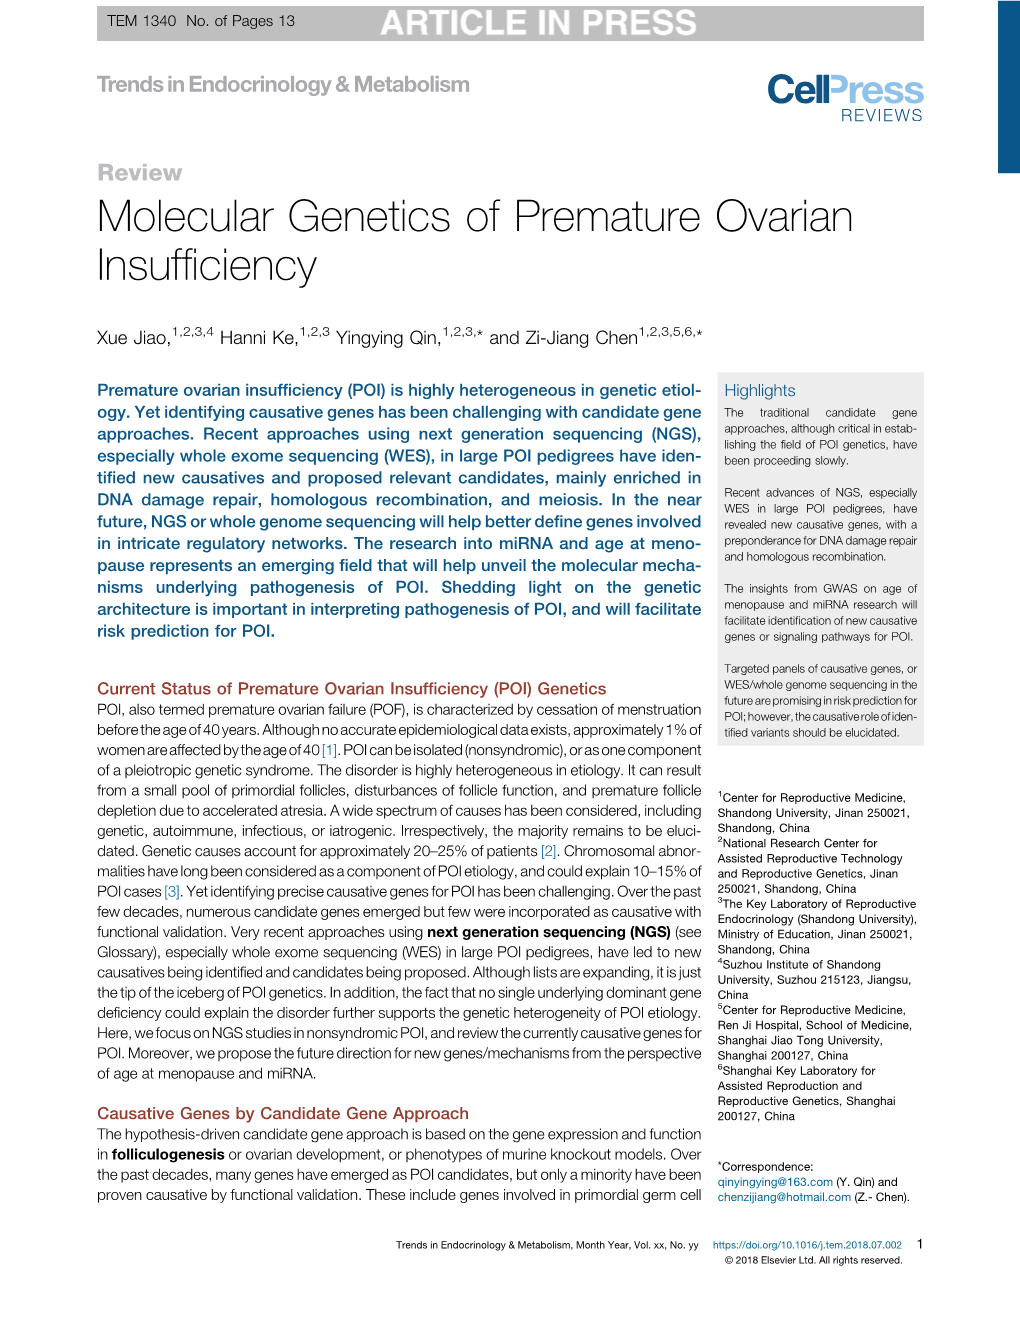 Molecular Genetics of Premature Ovarian Insufficiency